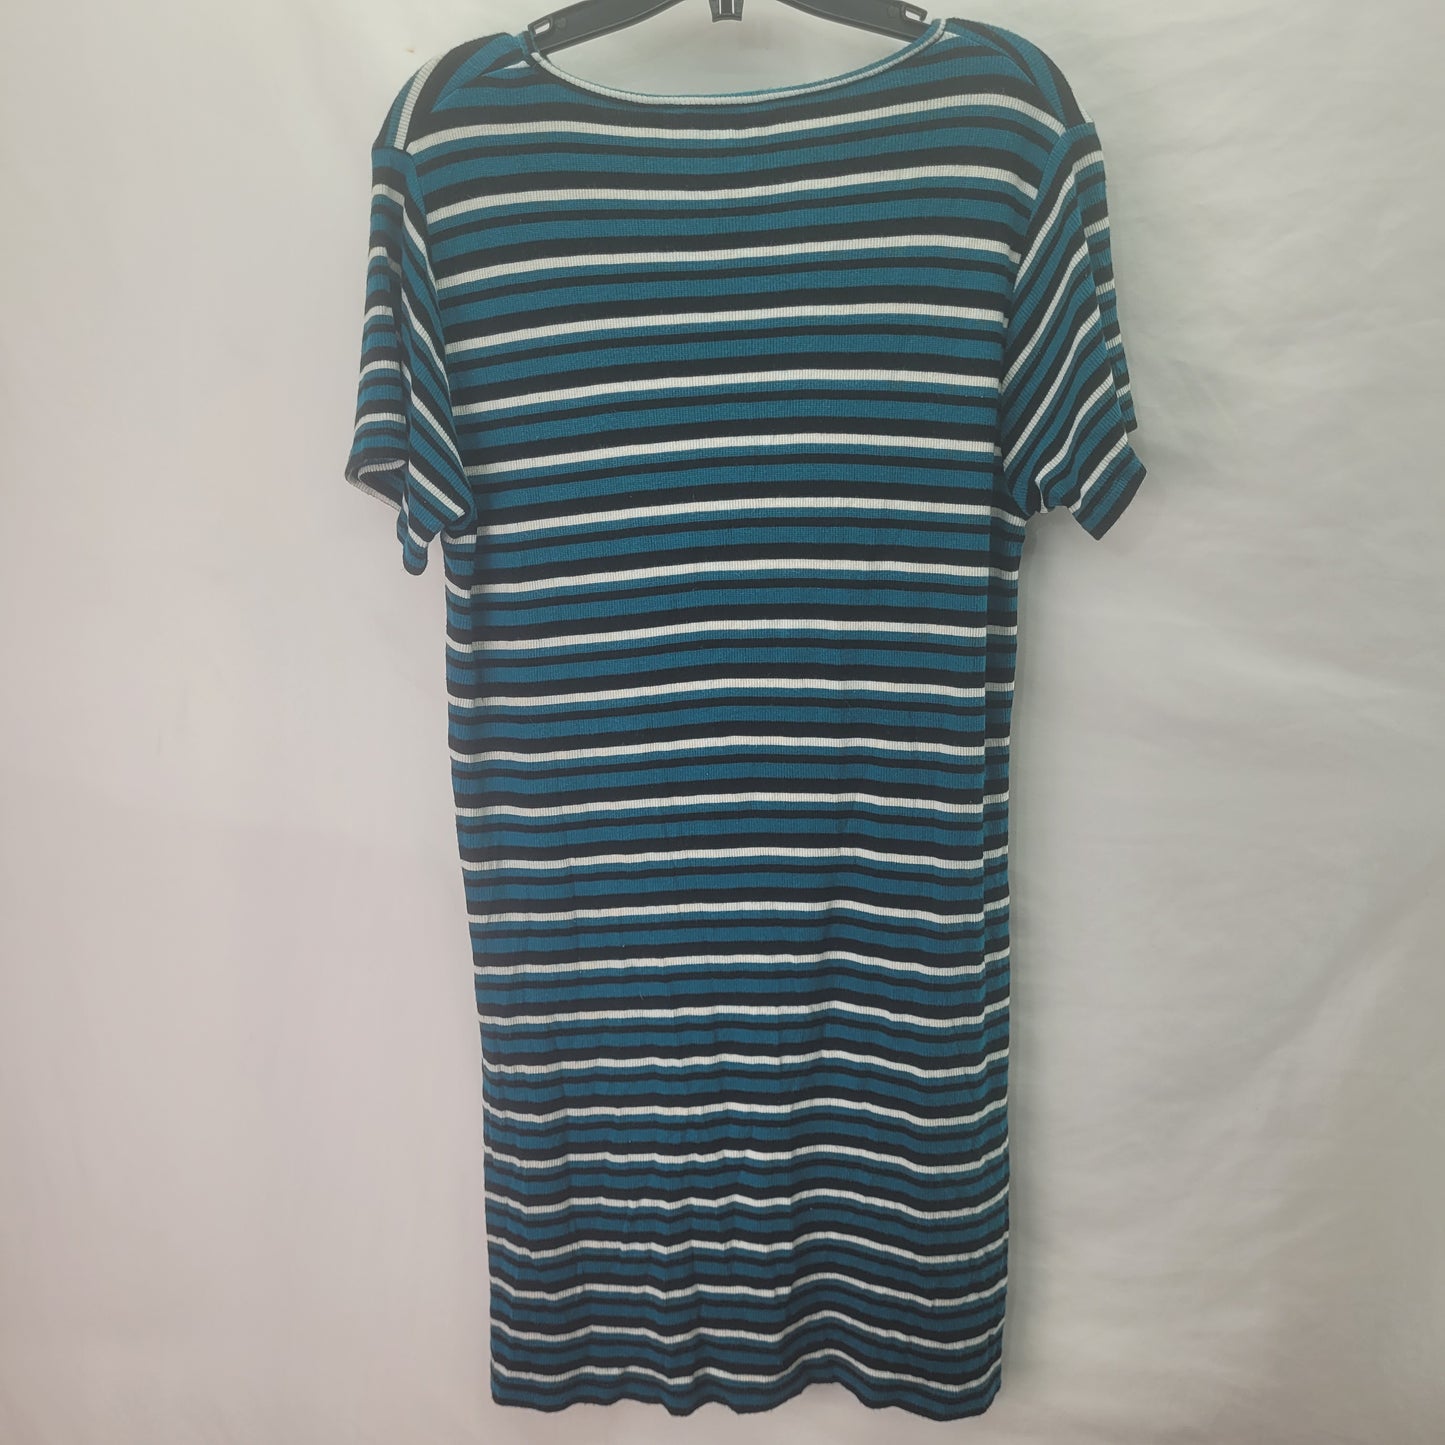 Obey Worldwide T-Shirt Dress Striped - Small